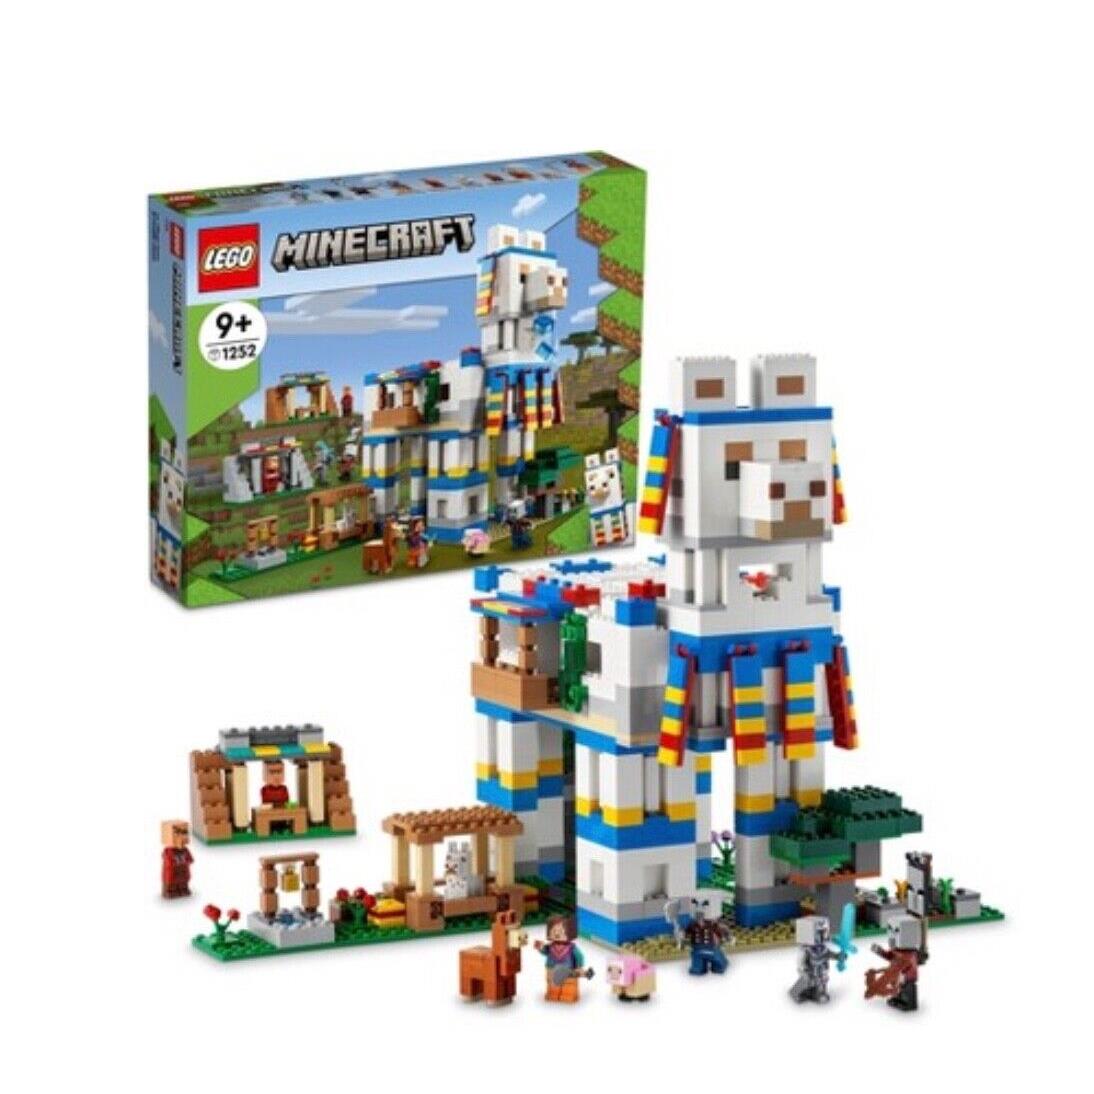 Lego Minecraft The Llama Village 21188 Building Set 1 252 Pieces 9+ Years